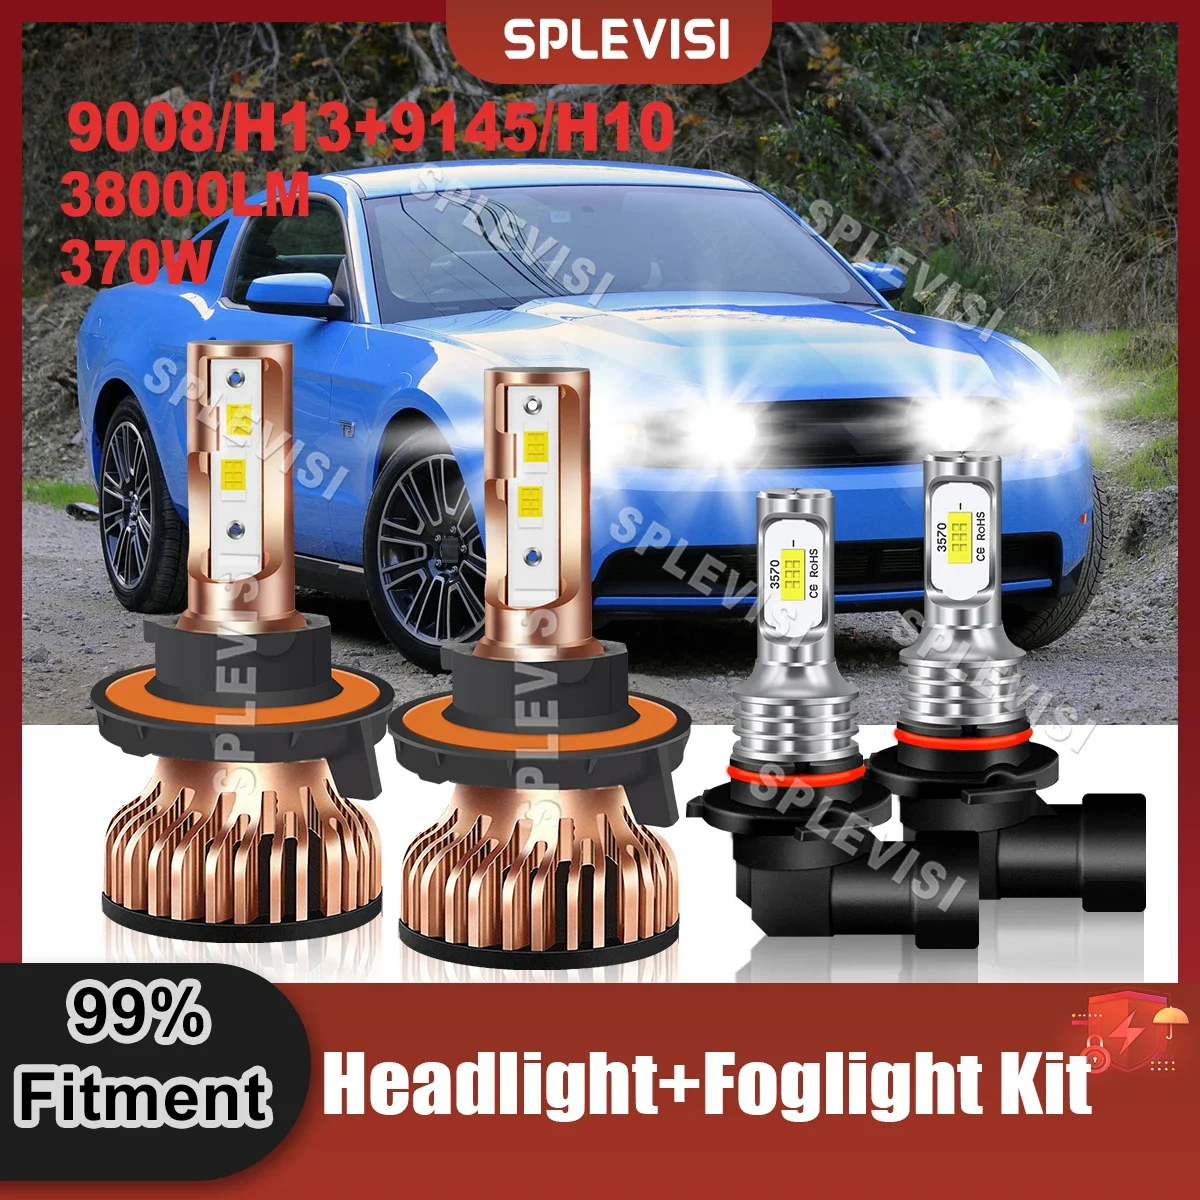 

Upgrade Car Light LED Headlight 9008/H13 High Low Beam 9145/H10 Foglamp For Ford Mustang 2005 2006 2007 2008 2009 2010 2011 2012